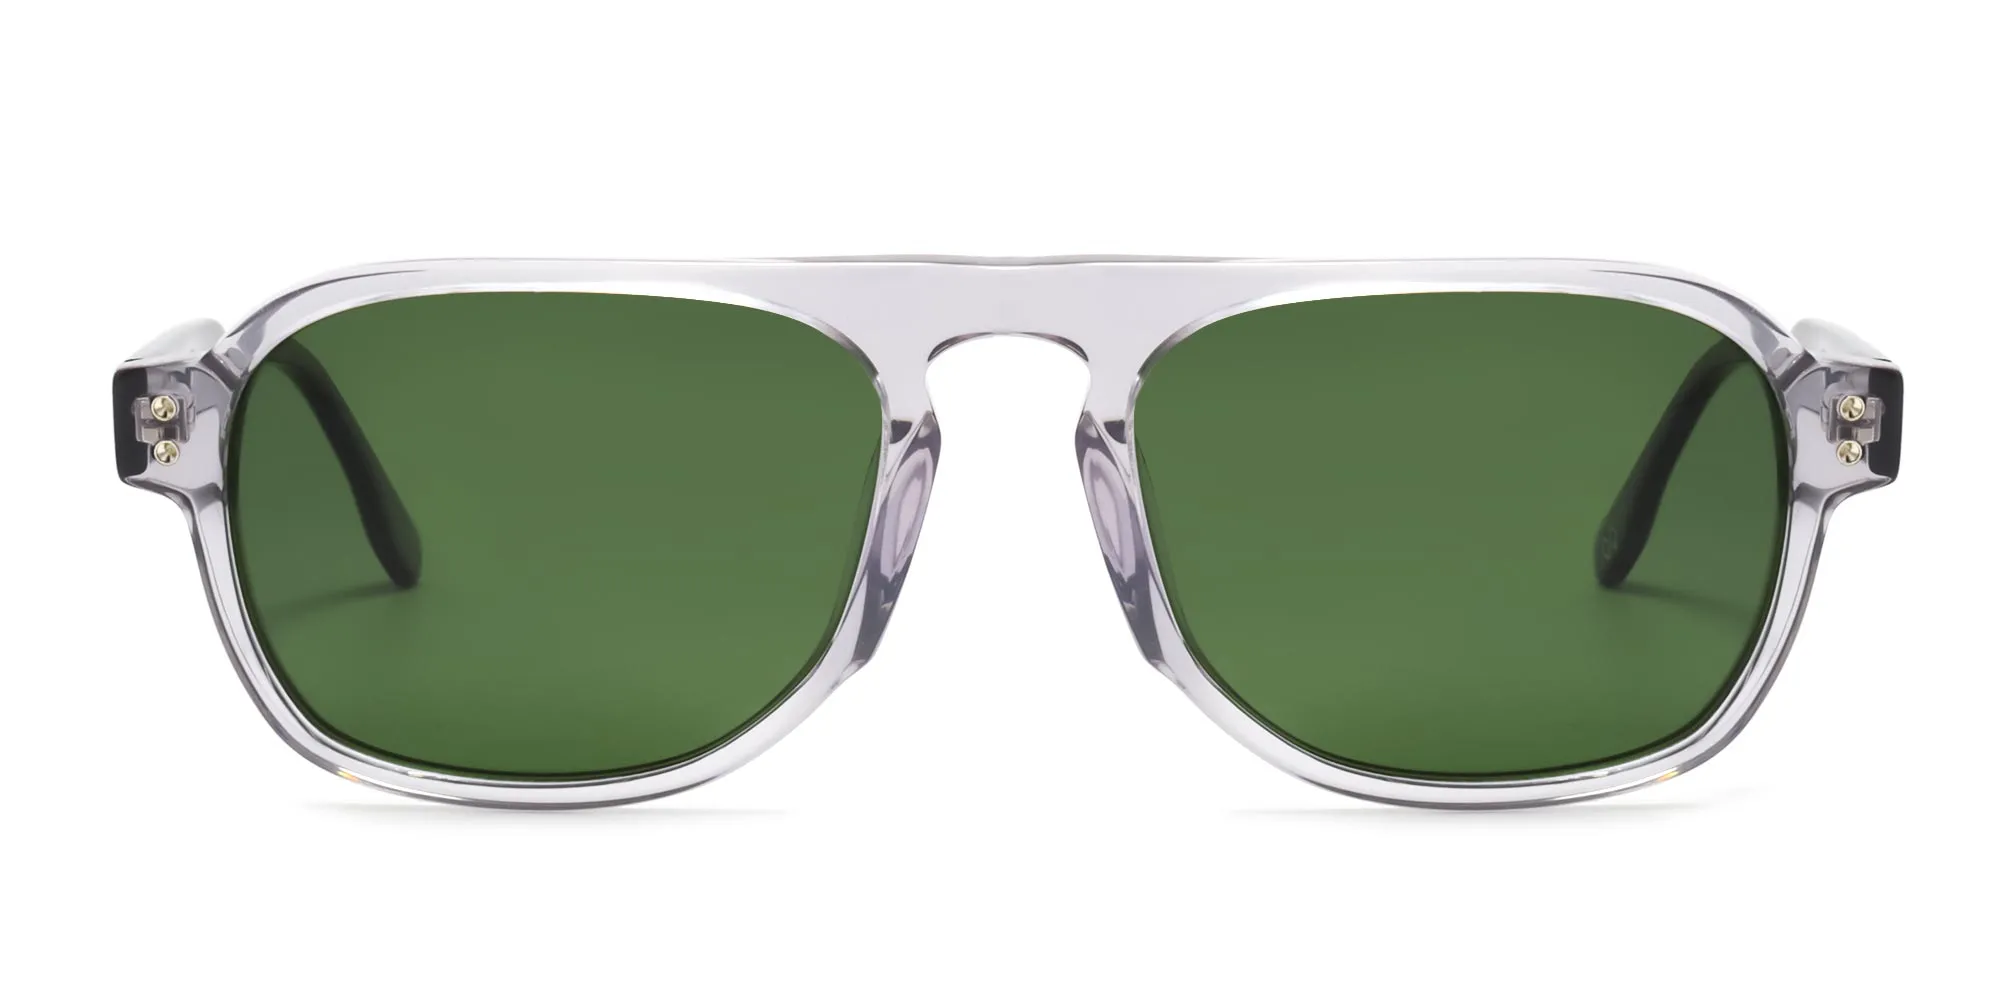 Clear frame green & Black sunglasses-2